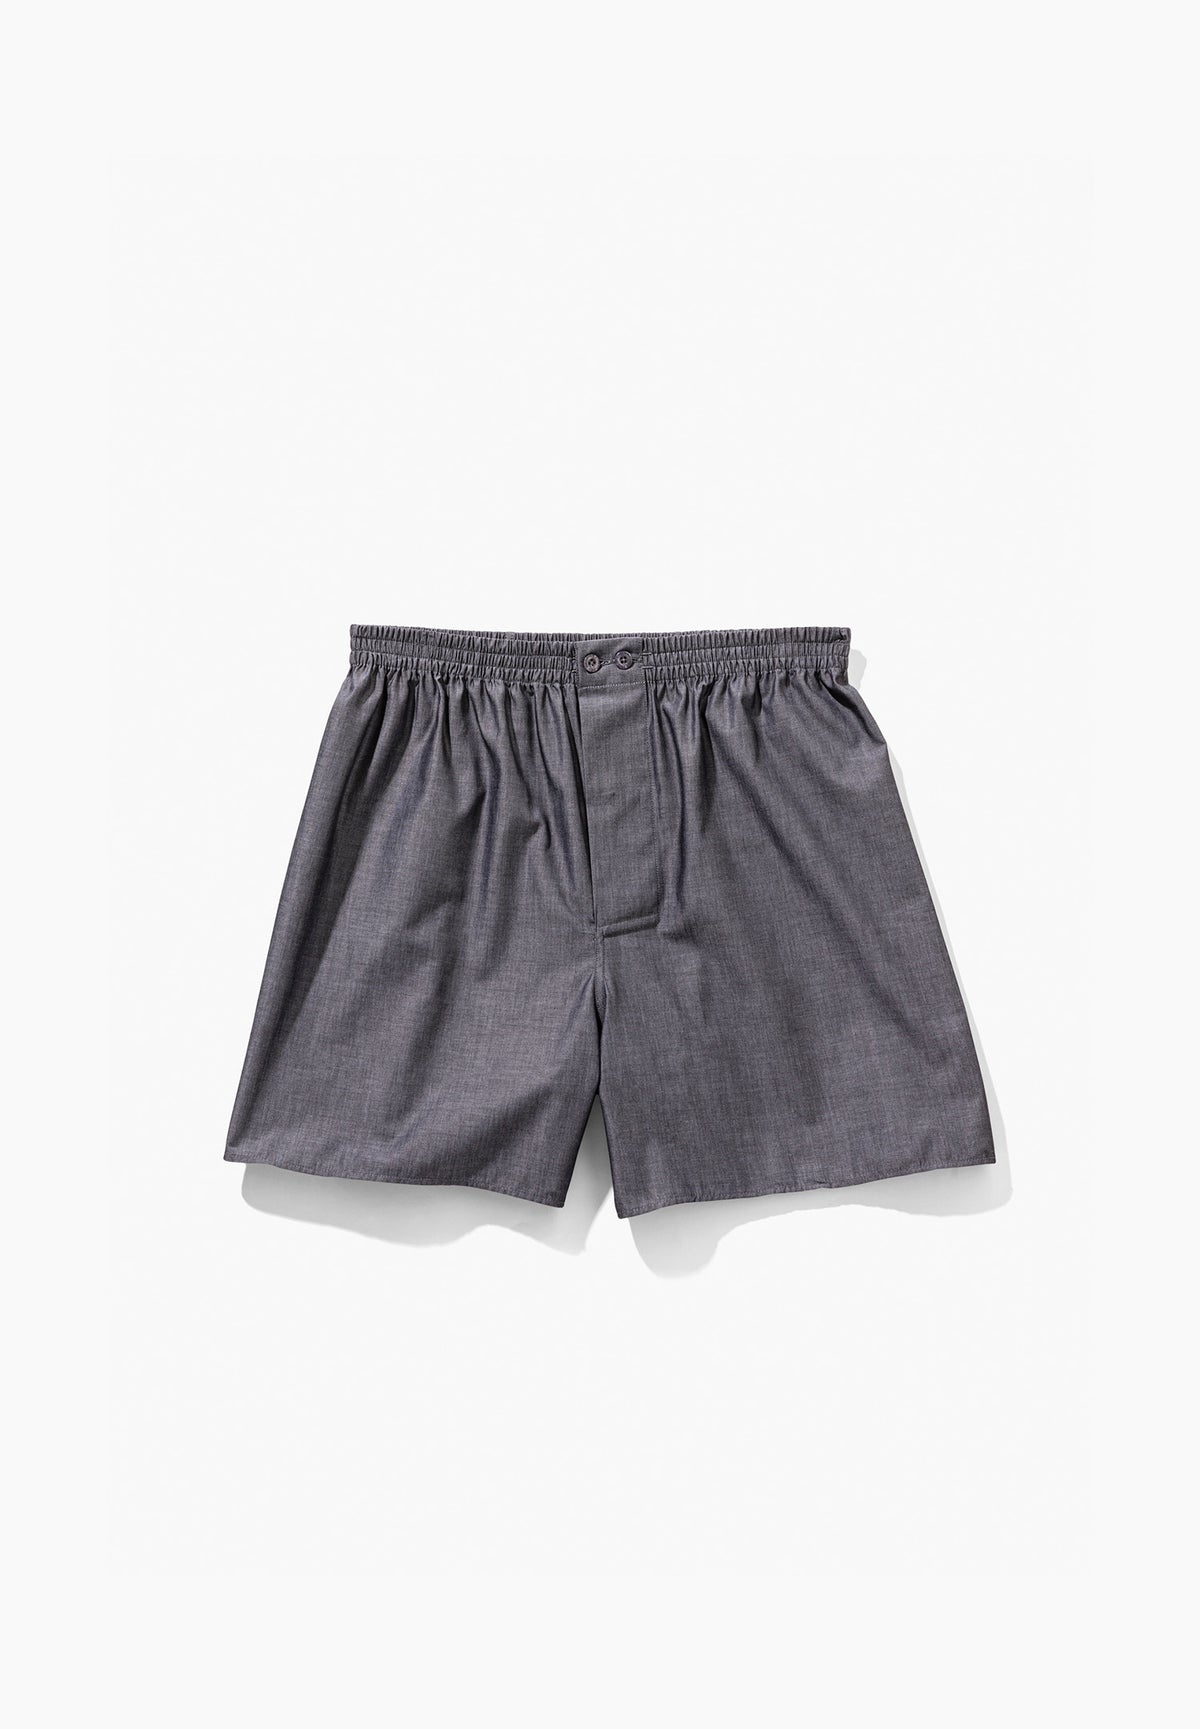 Woven Nightwear | Boxer Shorts - dark grey mélange